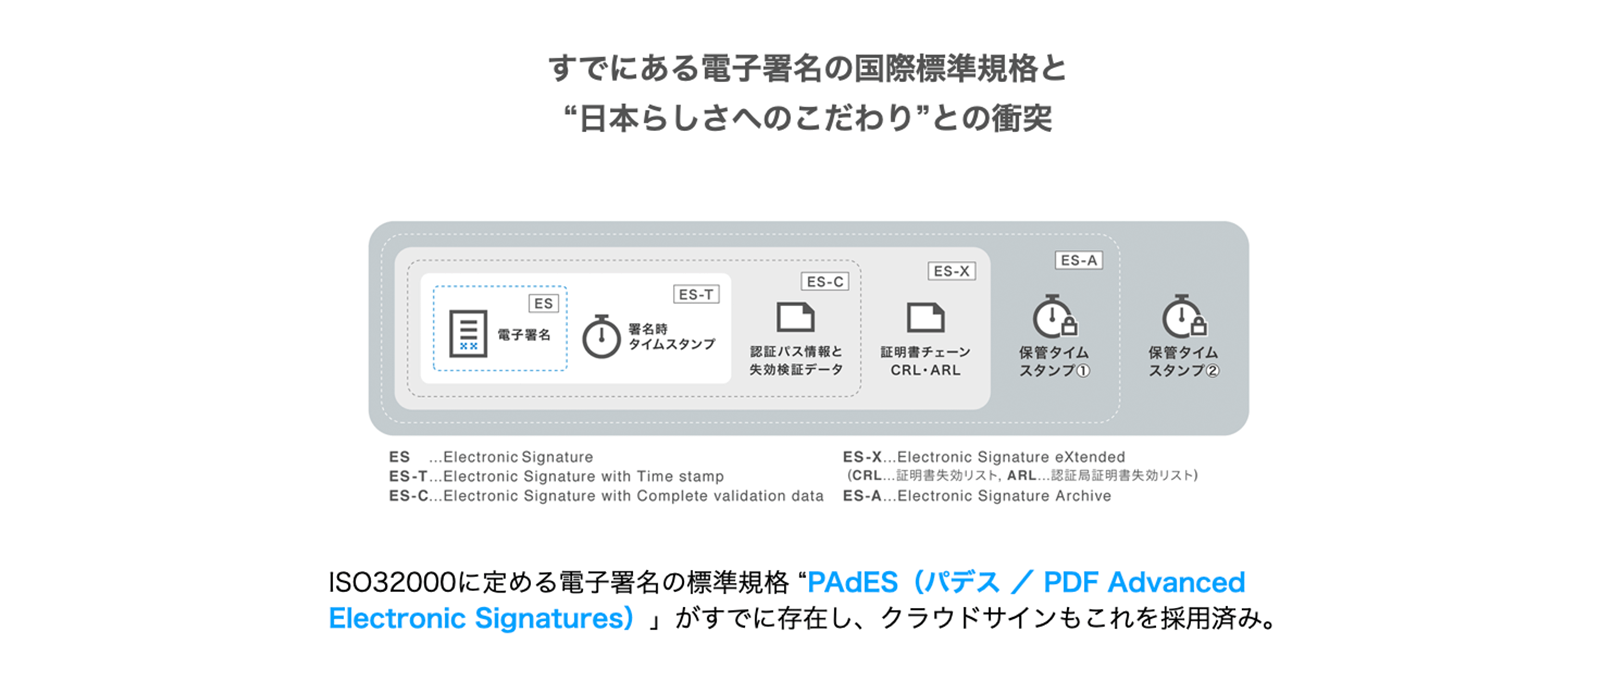 PAdES（パデス ／ PDF Advanced Electronic Signatures）を採用するサービスか確認する